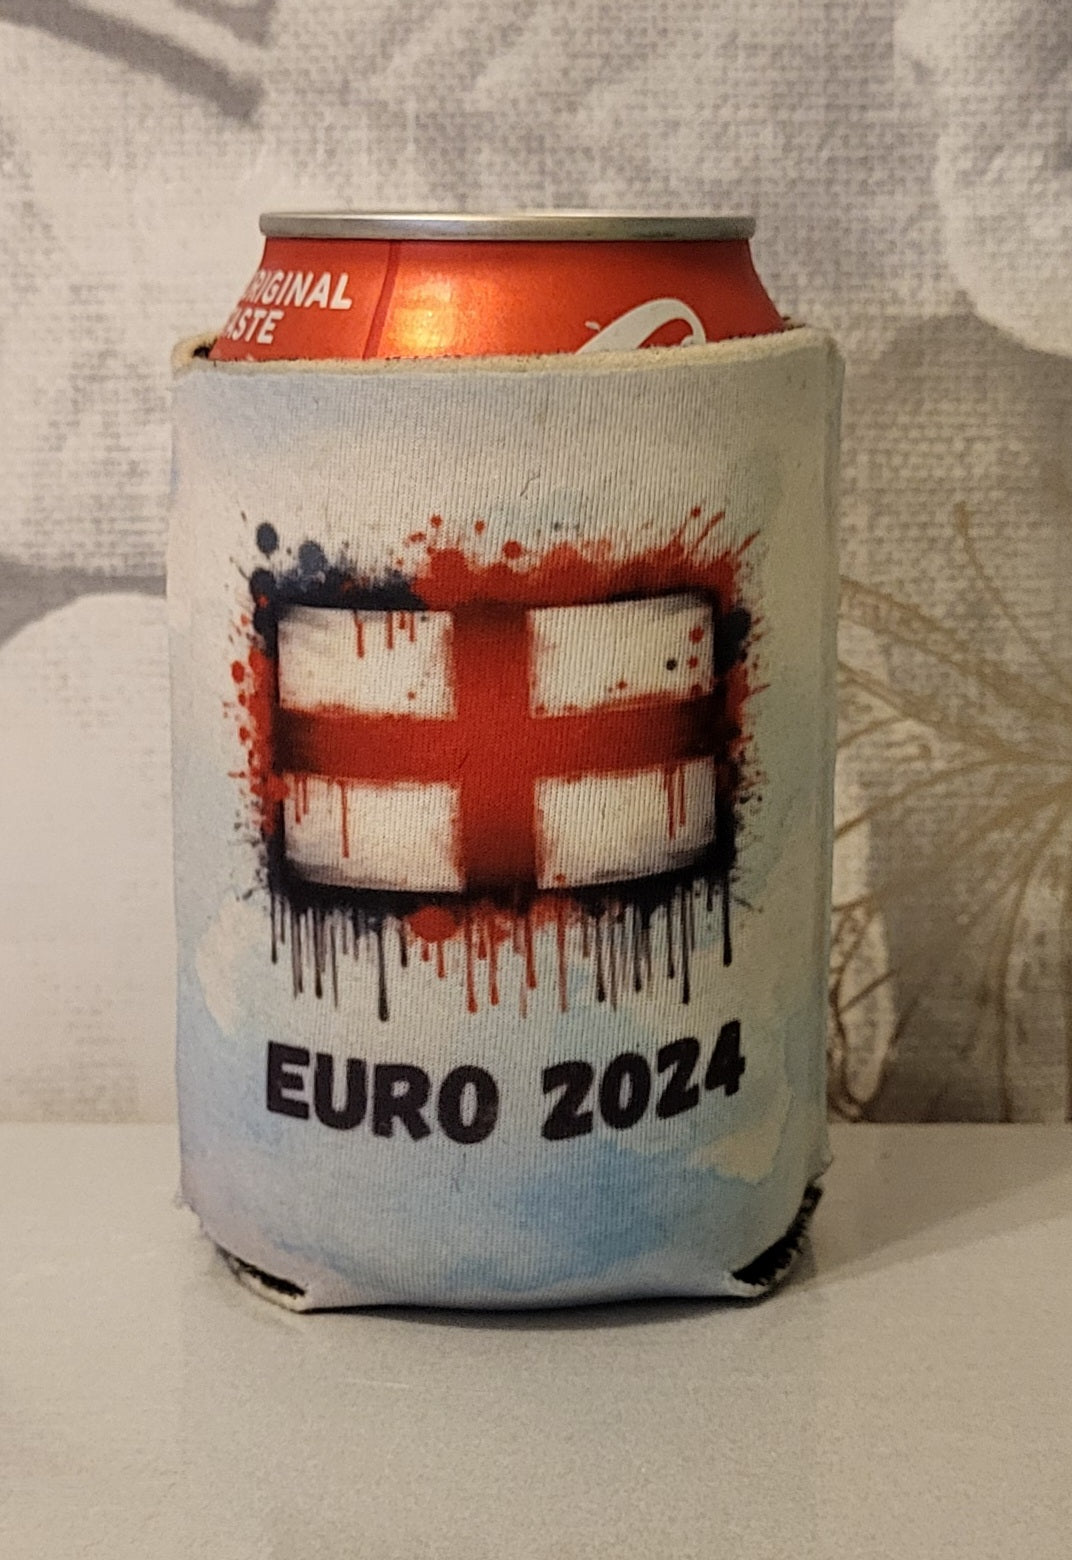 Euro 2024 Can Cozy